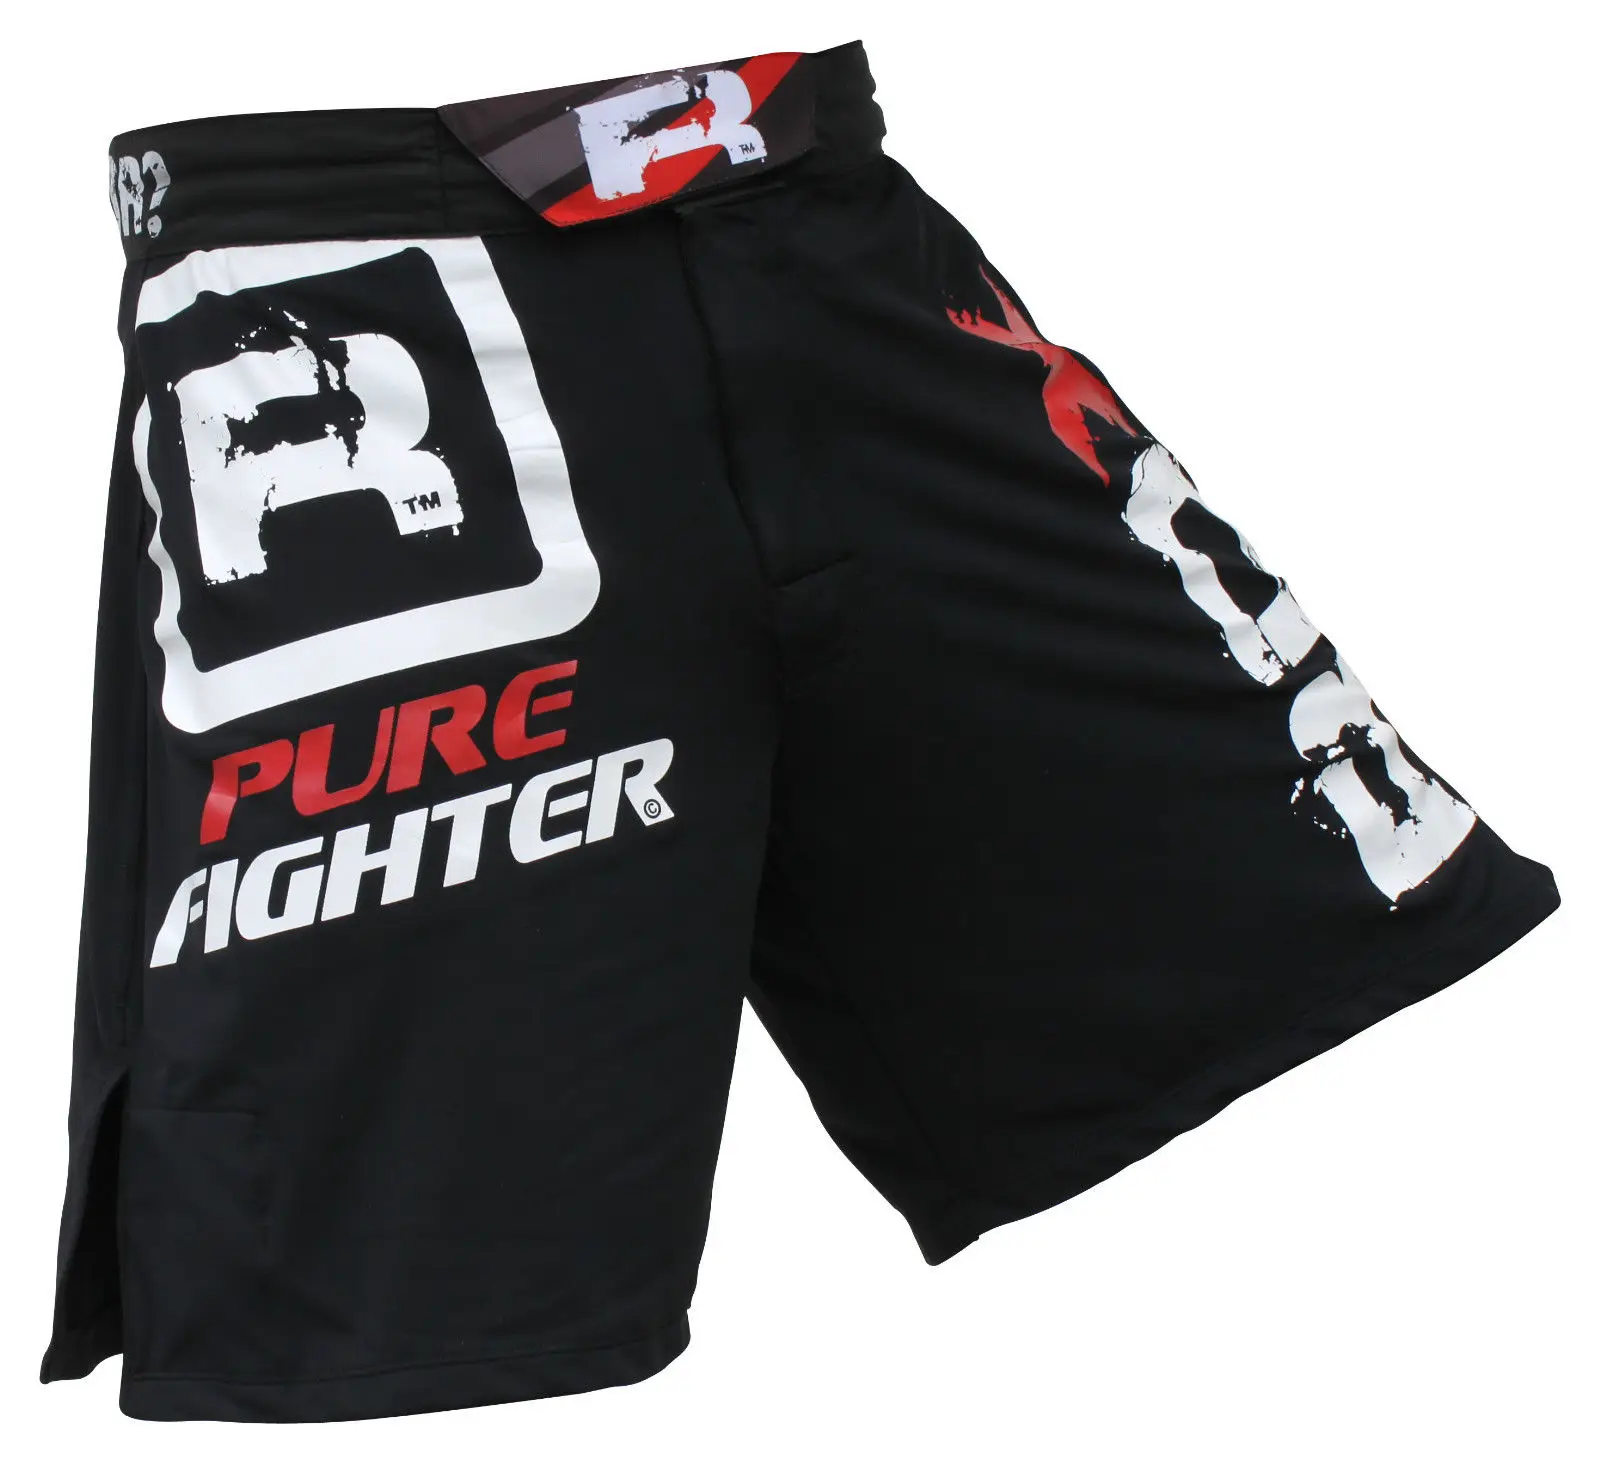 Blank MMA UFC Grappling Kick Boxing Martial Arts Fighter Shorts Free Shipping 